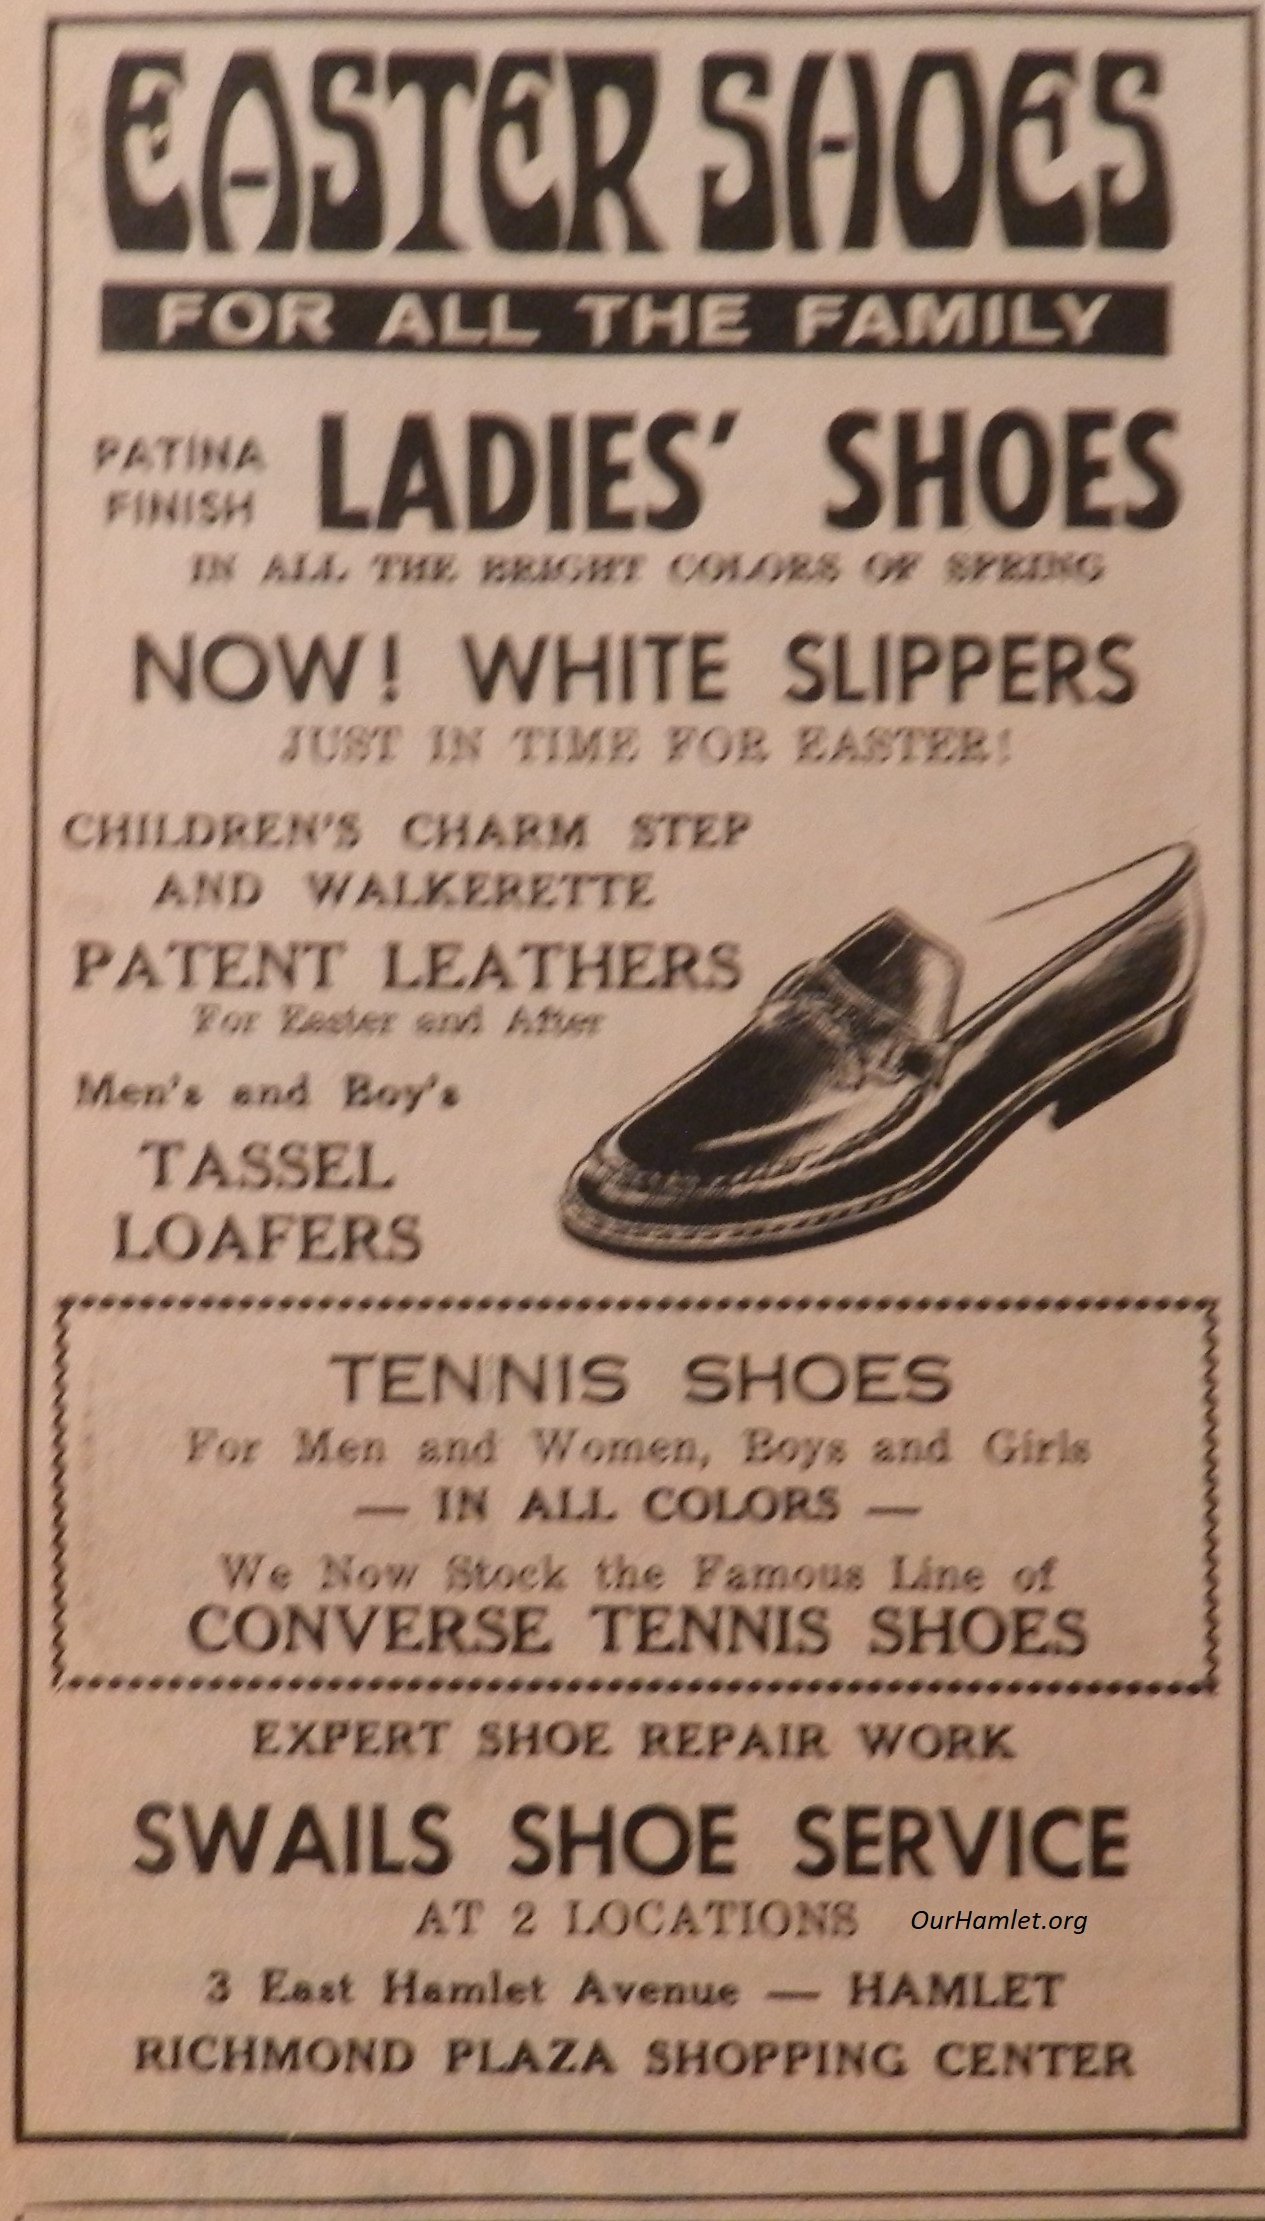 1968 Swails Shoe Shop OH.jpg